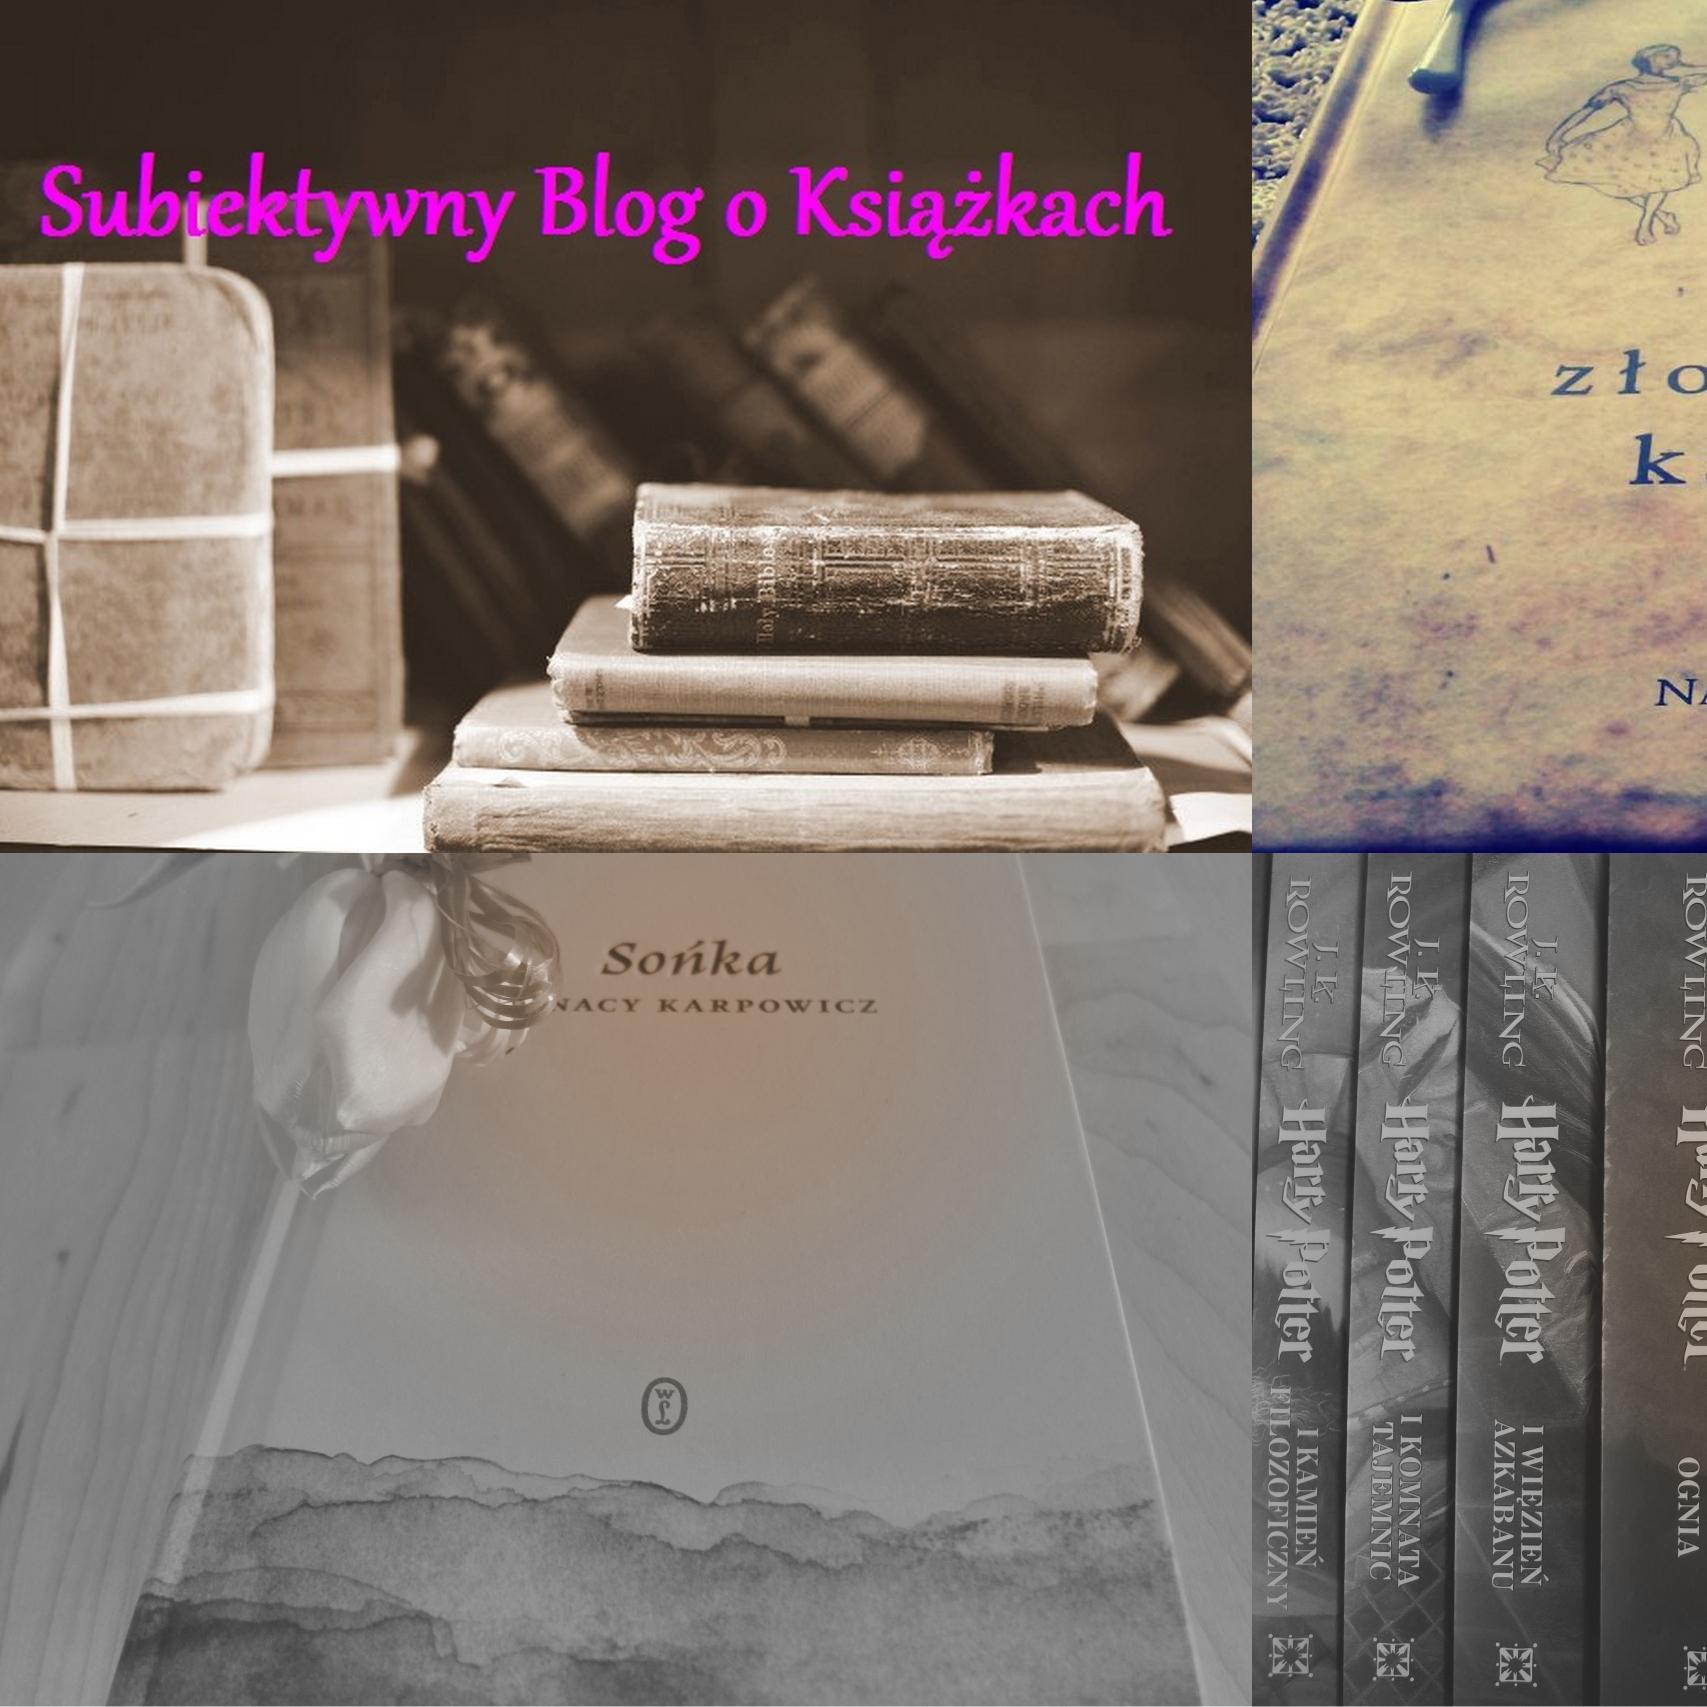 Subiektywny Blog o Książkach.

So many books, so little time!